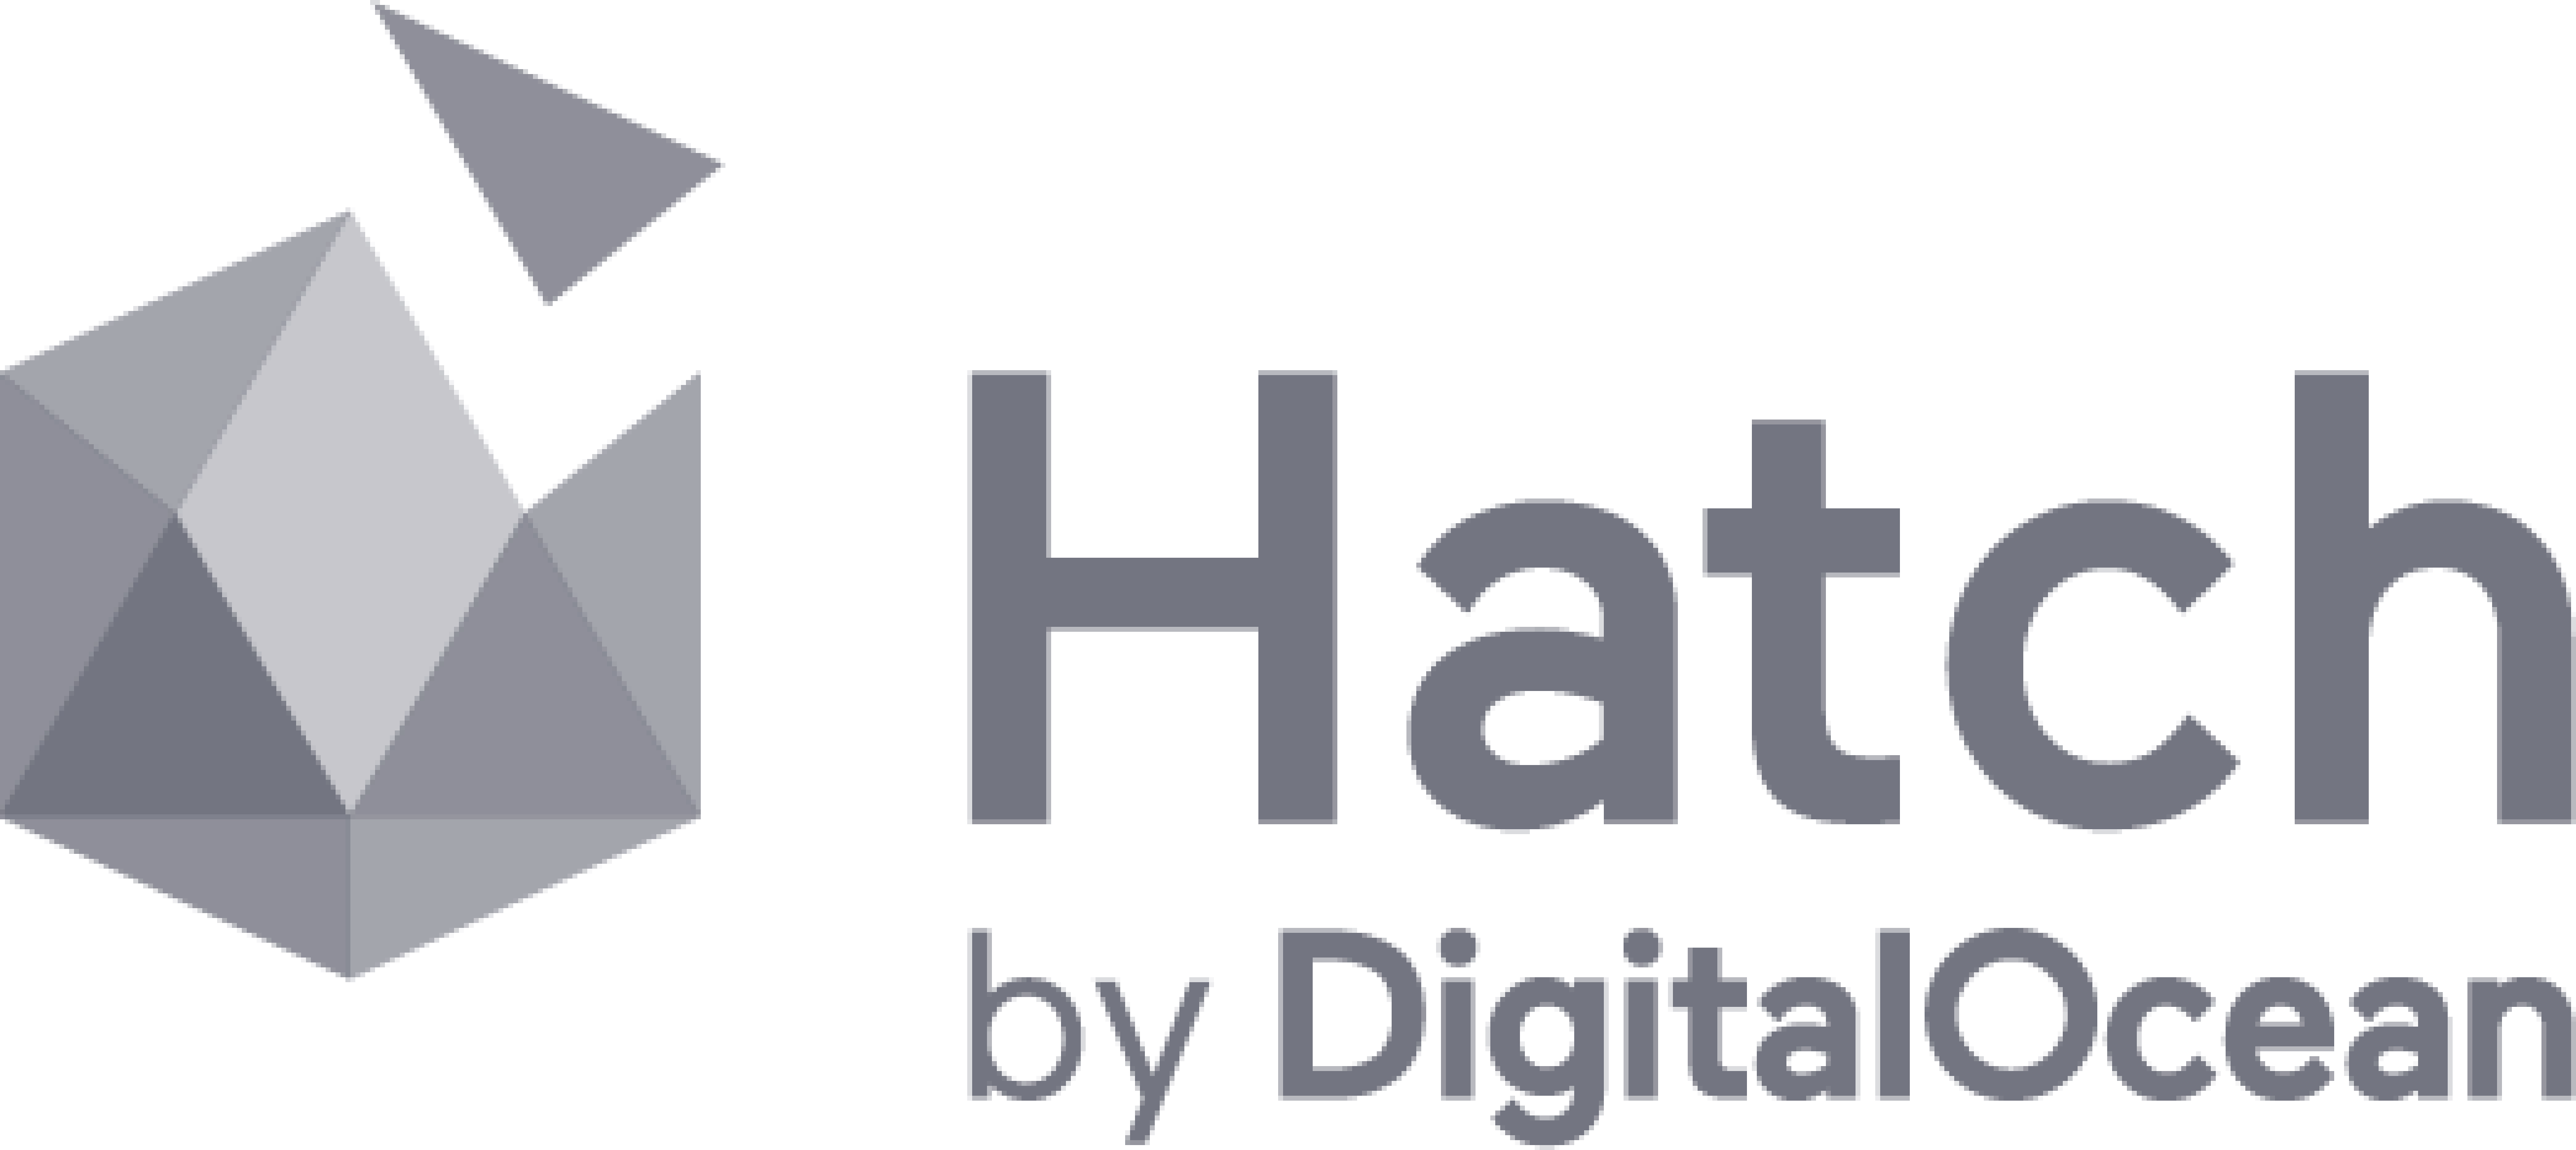 digital ocean hatch logo